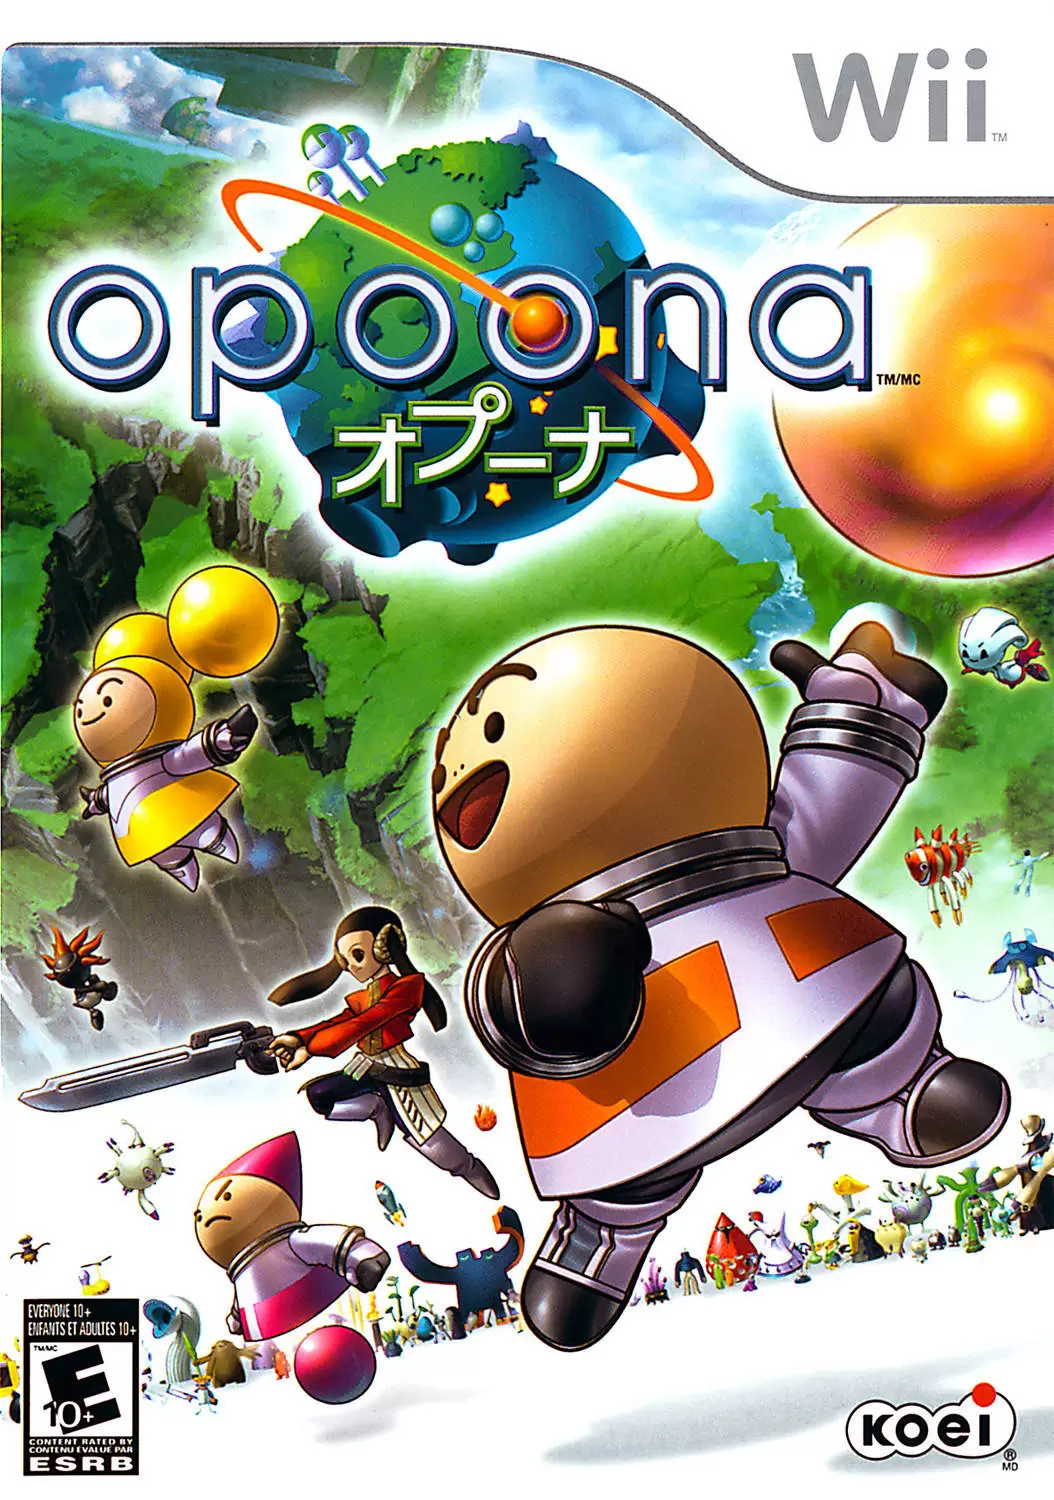 Jeux Nintendo Wii - Opoona